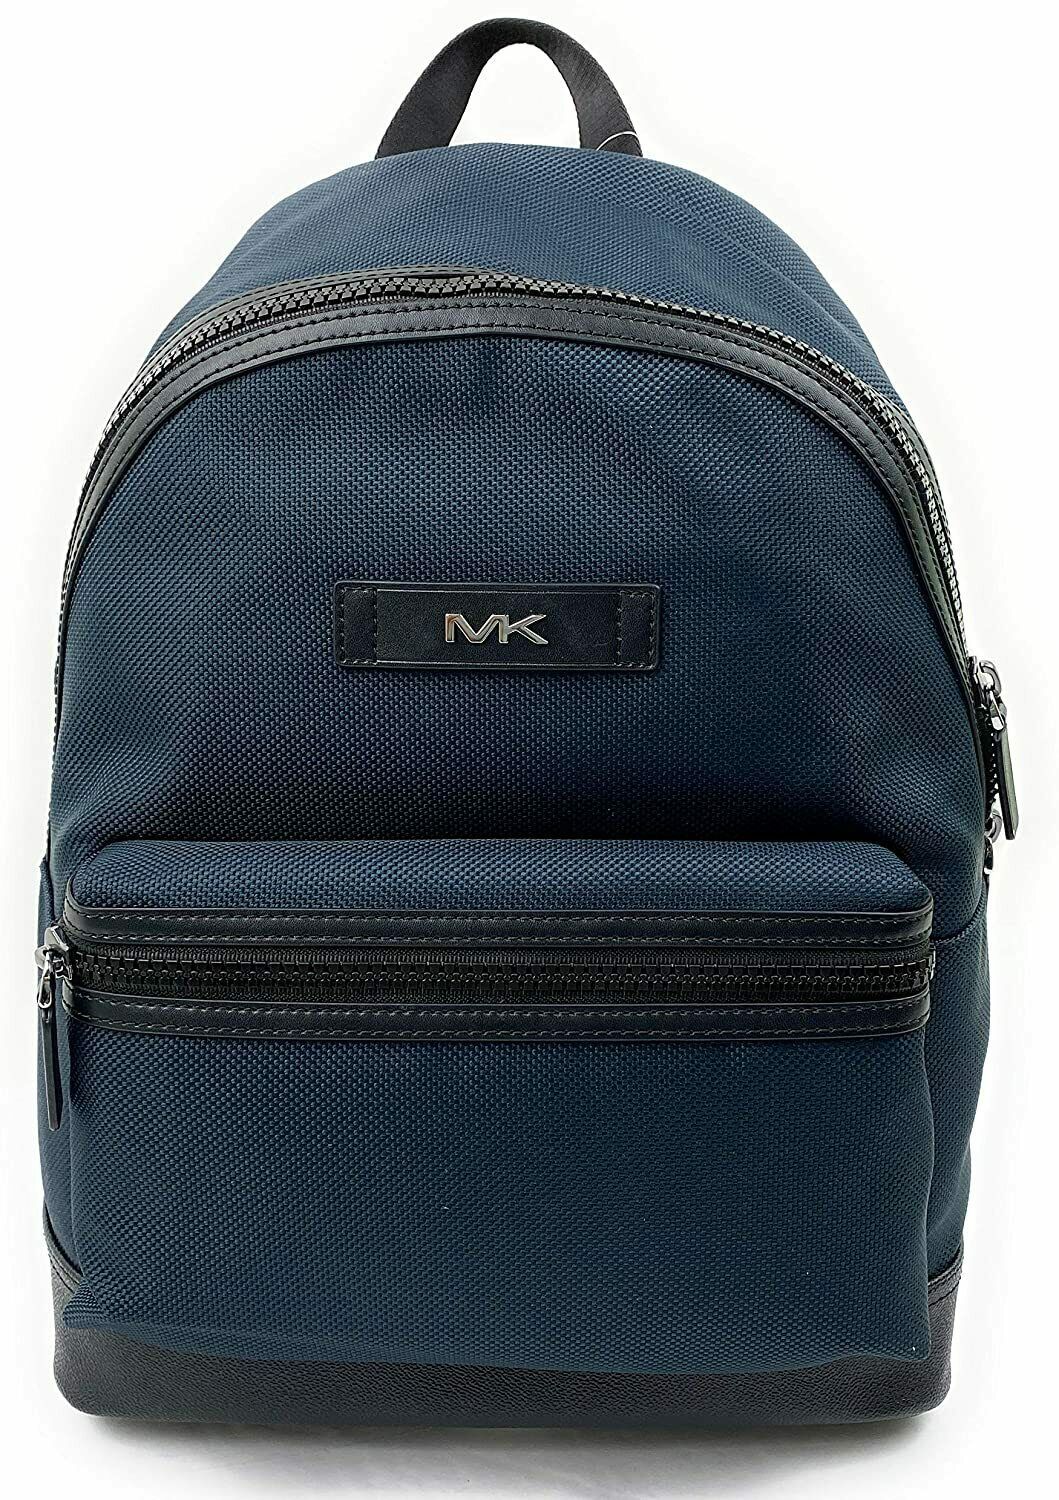 Michael Kors Kent Sport Navy Blue Nylon Large Backpack 37F9LKSB2C $398 Retail